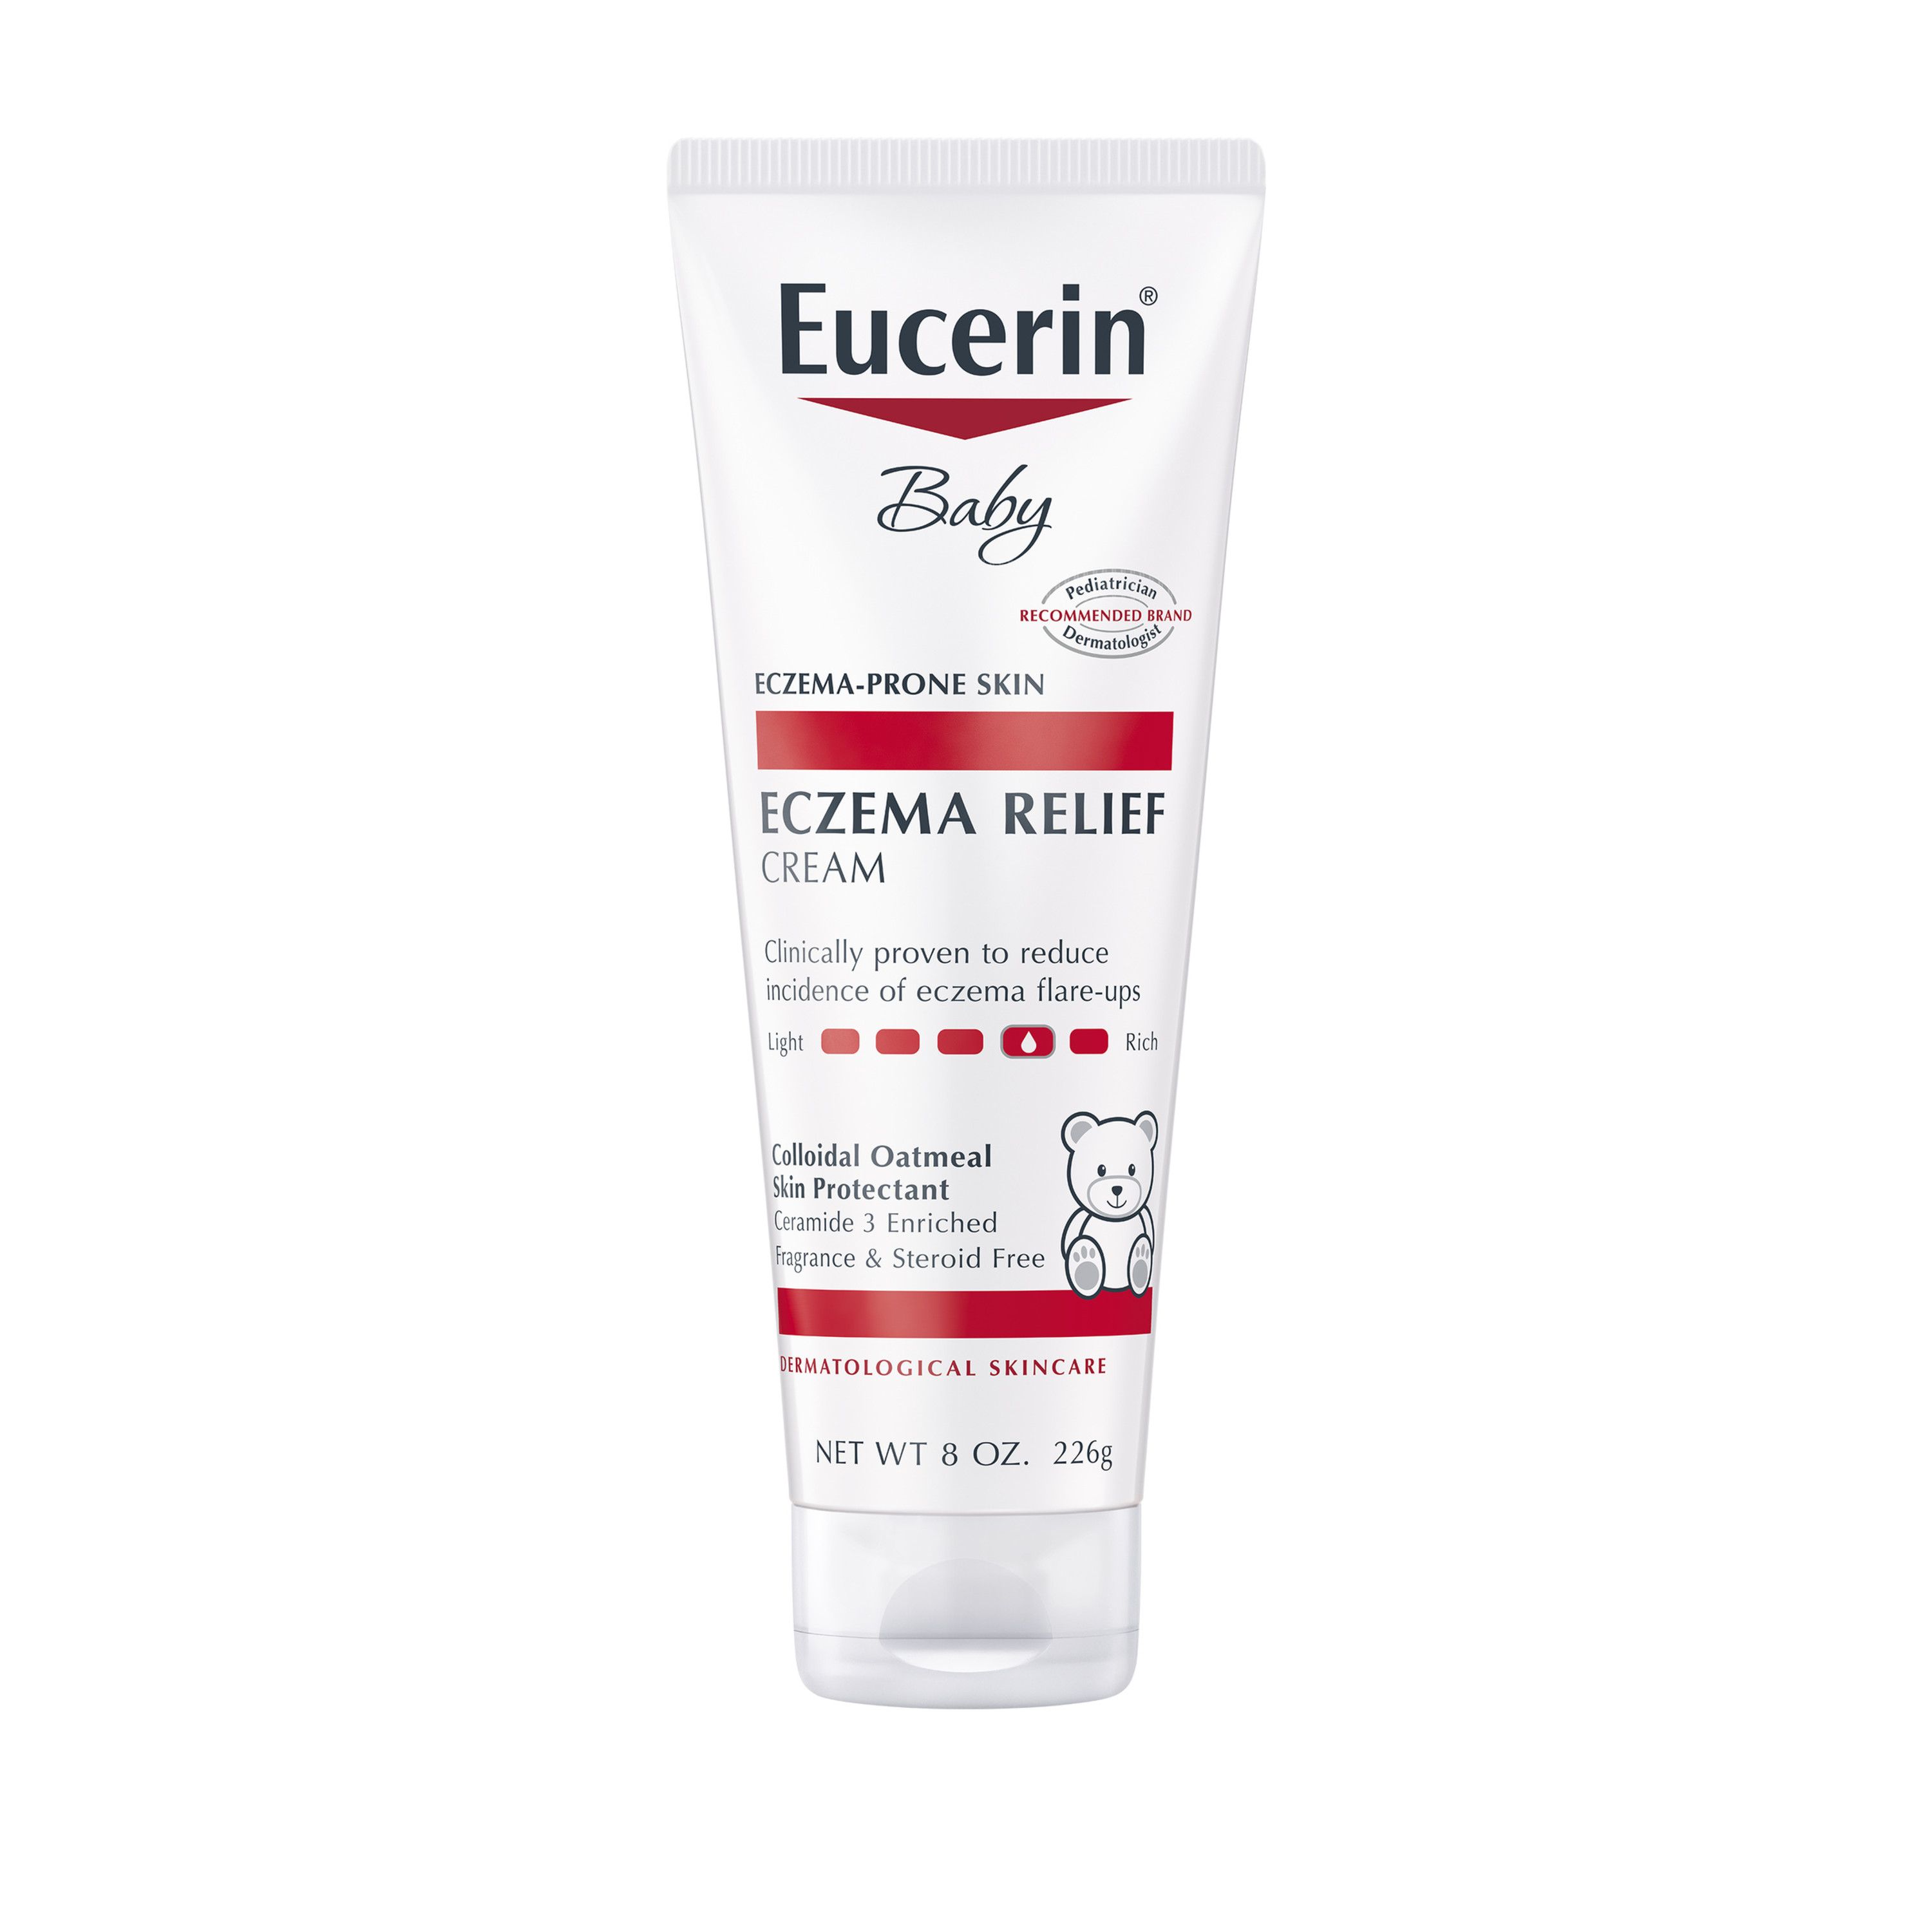 Eucerin Baby Eczema Relief Body Cream, Fragrance Free, 8 oz Tube - image 1 of 5